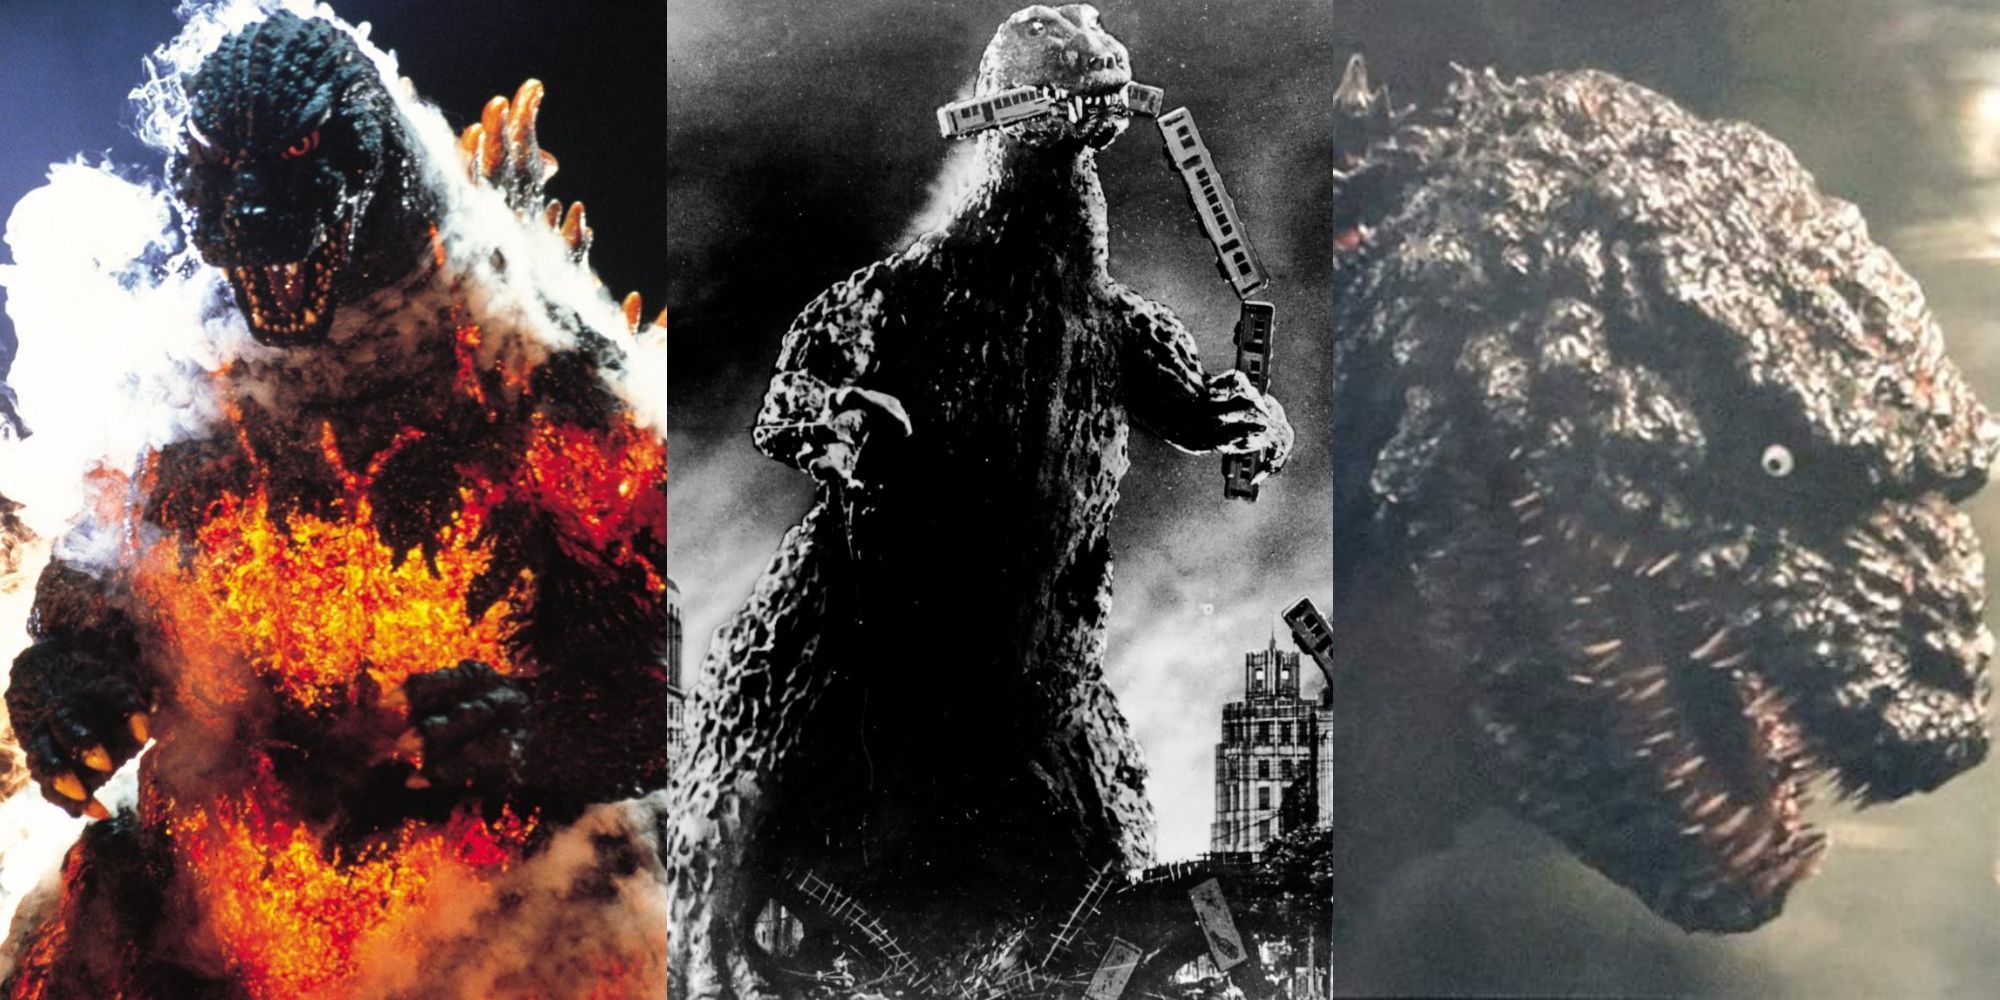 A collage with some of the darkest versions of Godzilla, from Godzilla vs. Destoroyah, Godzilla (1954) and Shin Godzilla.